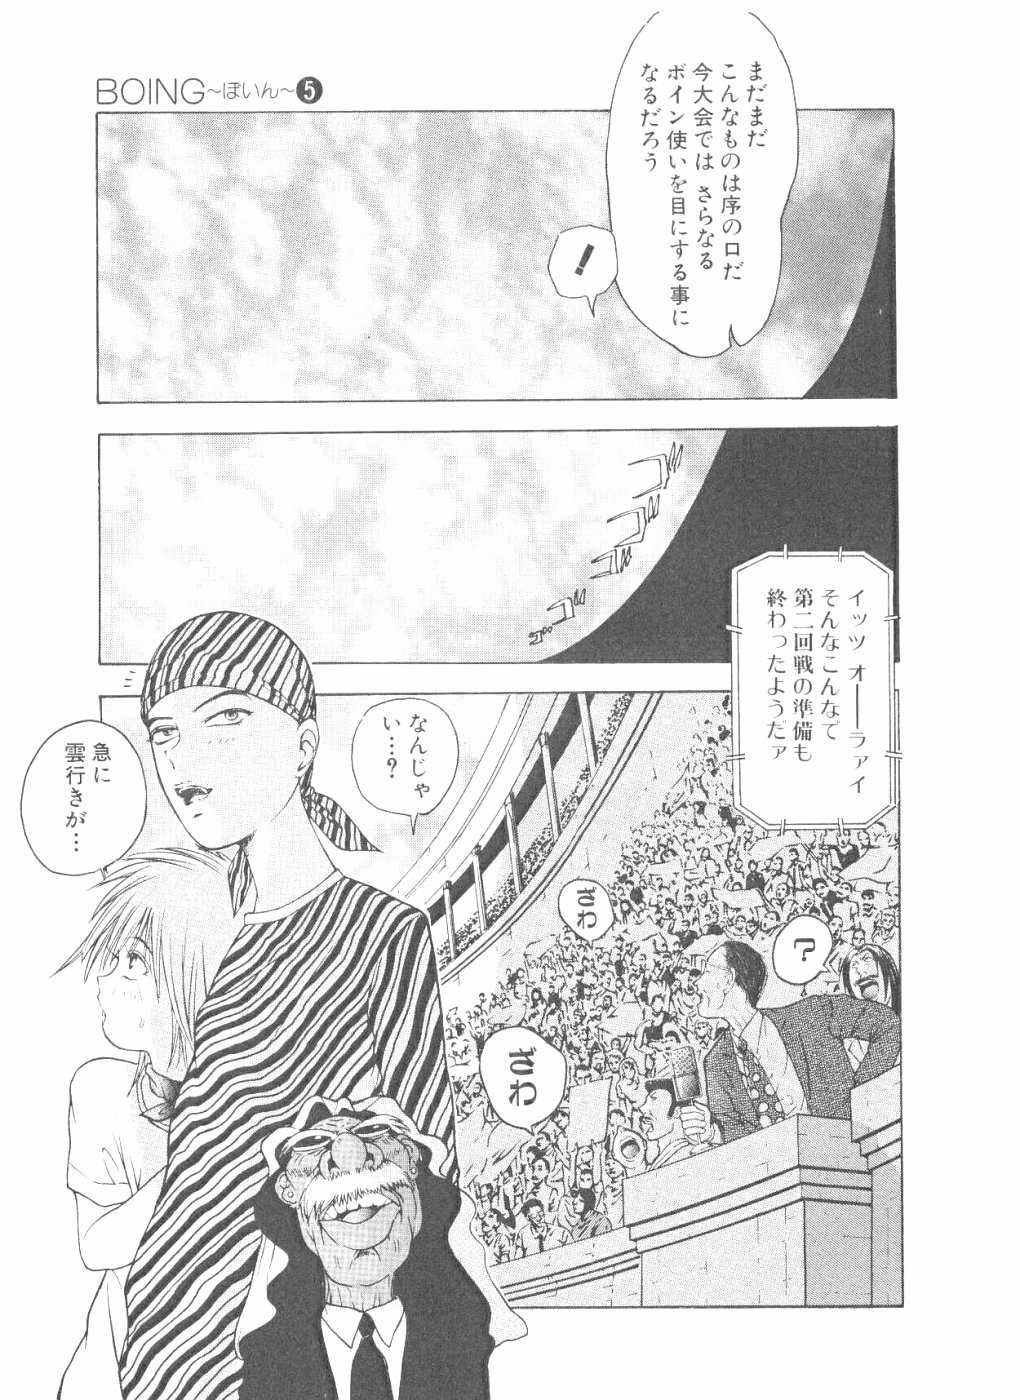 [Yamaguchi Masakazu] BOiNG Vol. 5 